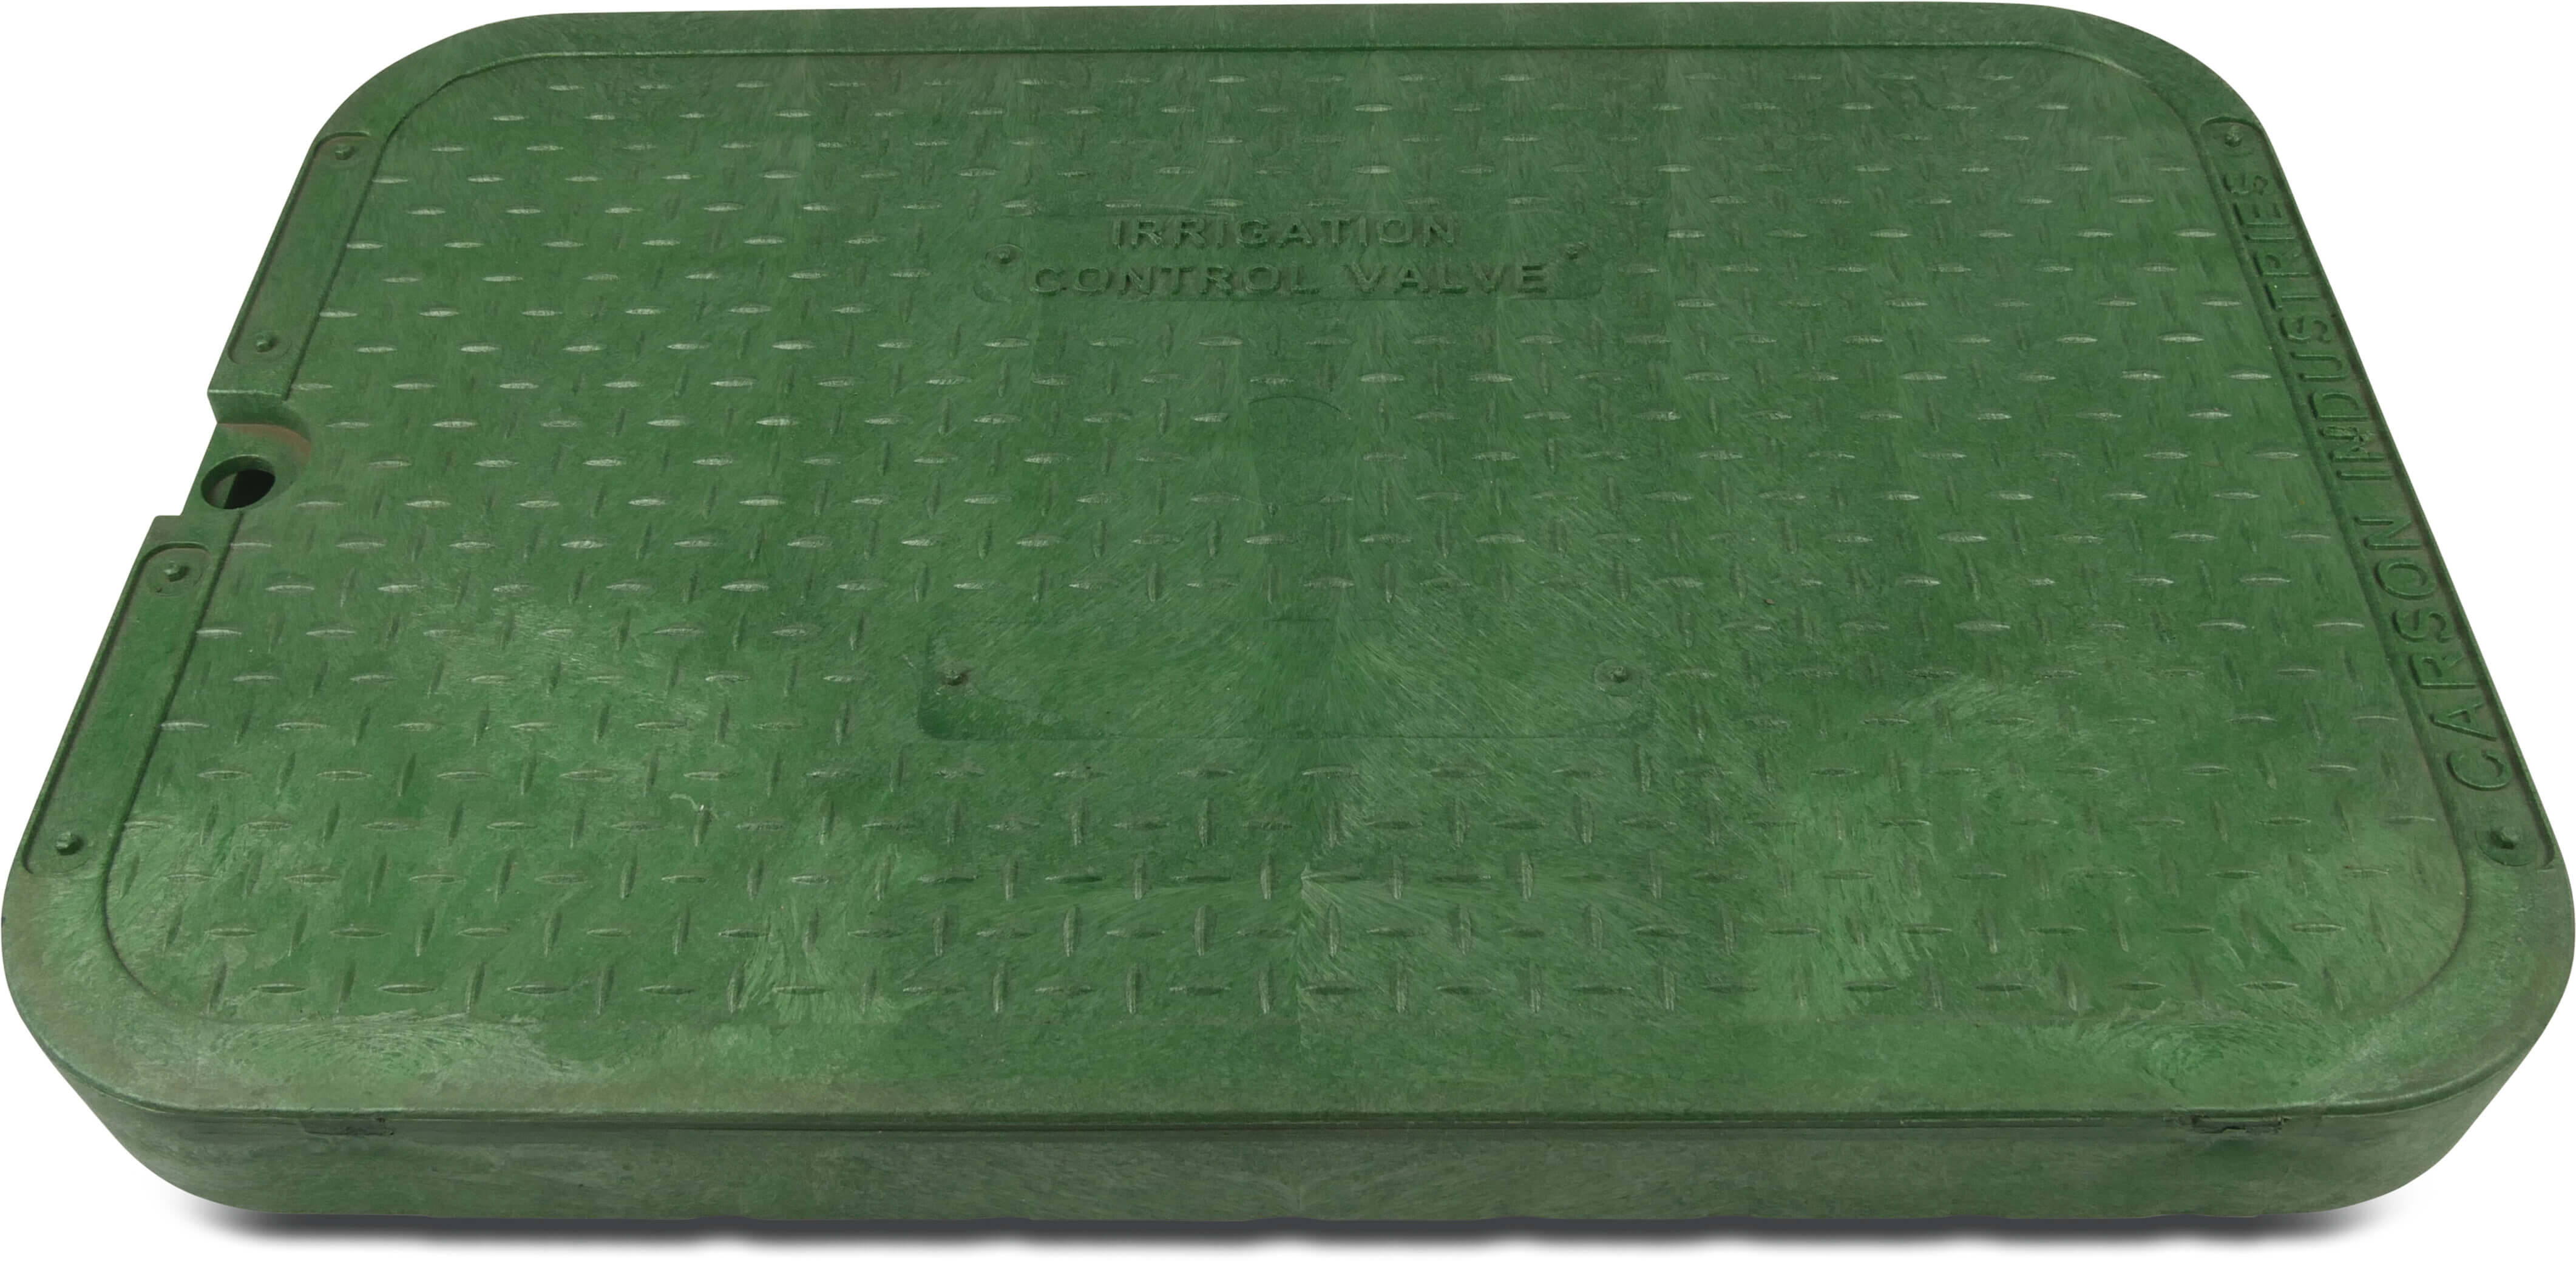 Ventilboks dæksel rektangulær HDPE grøn type VB-1324